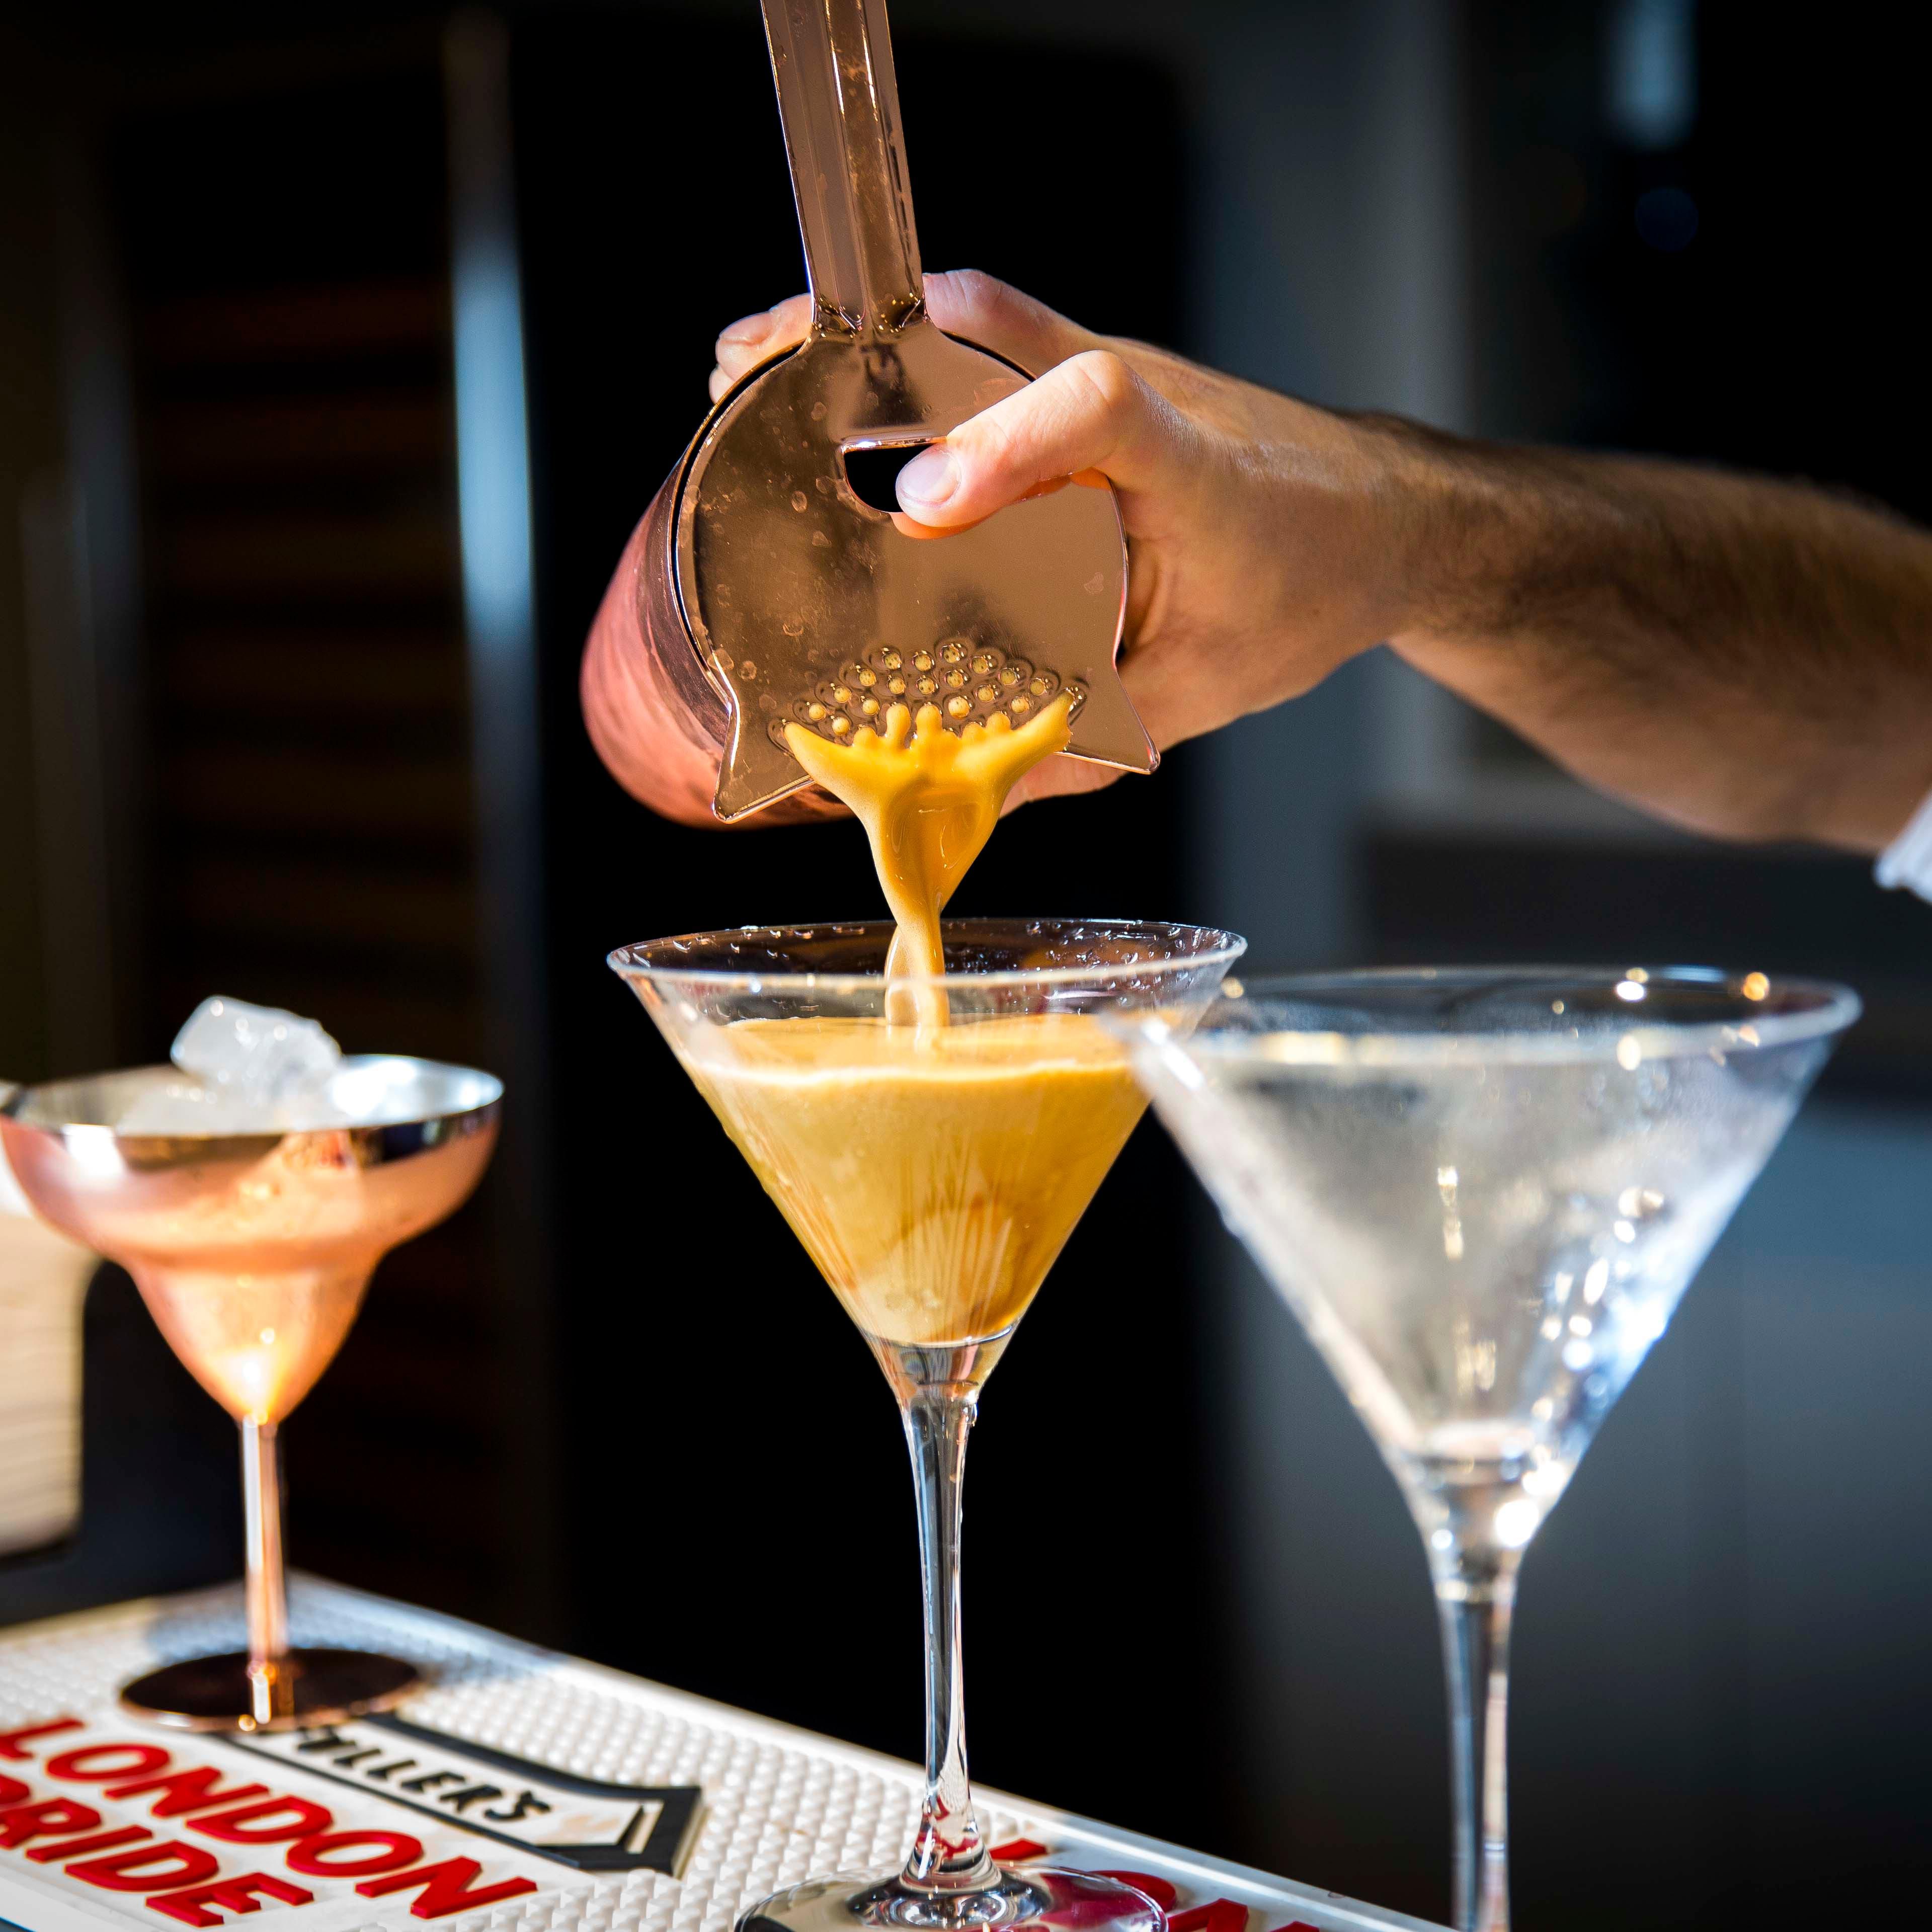 Enjoy refreshing cocktails at The 1449 Bar.